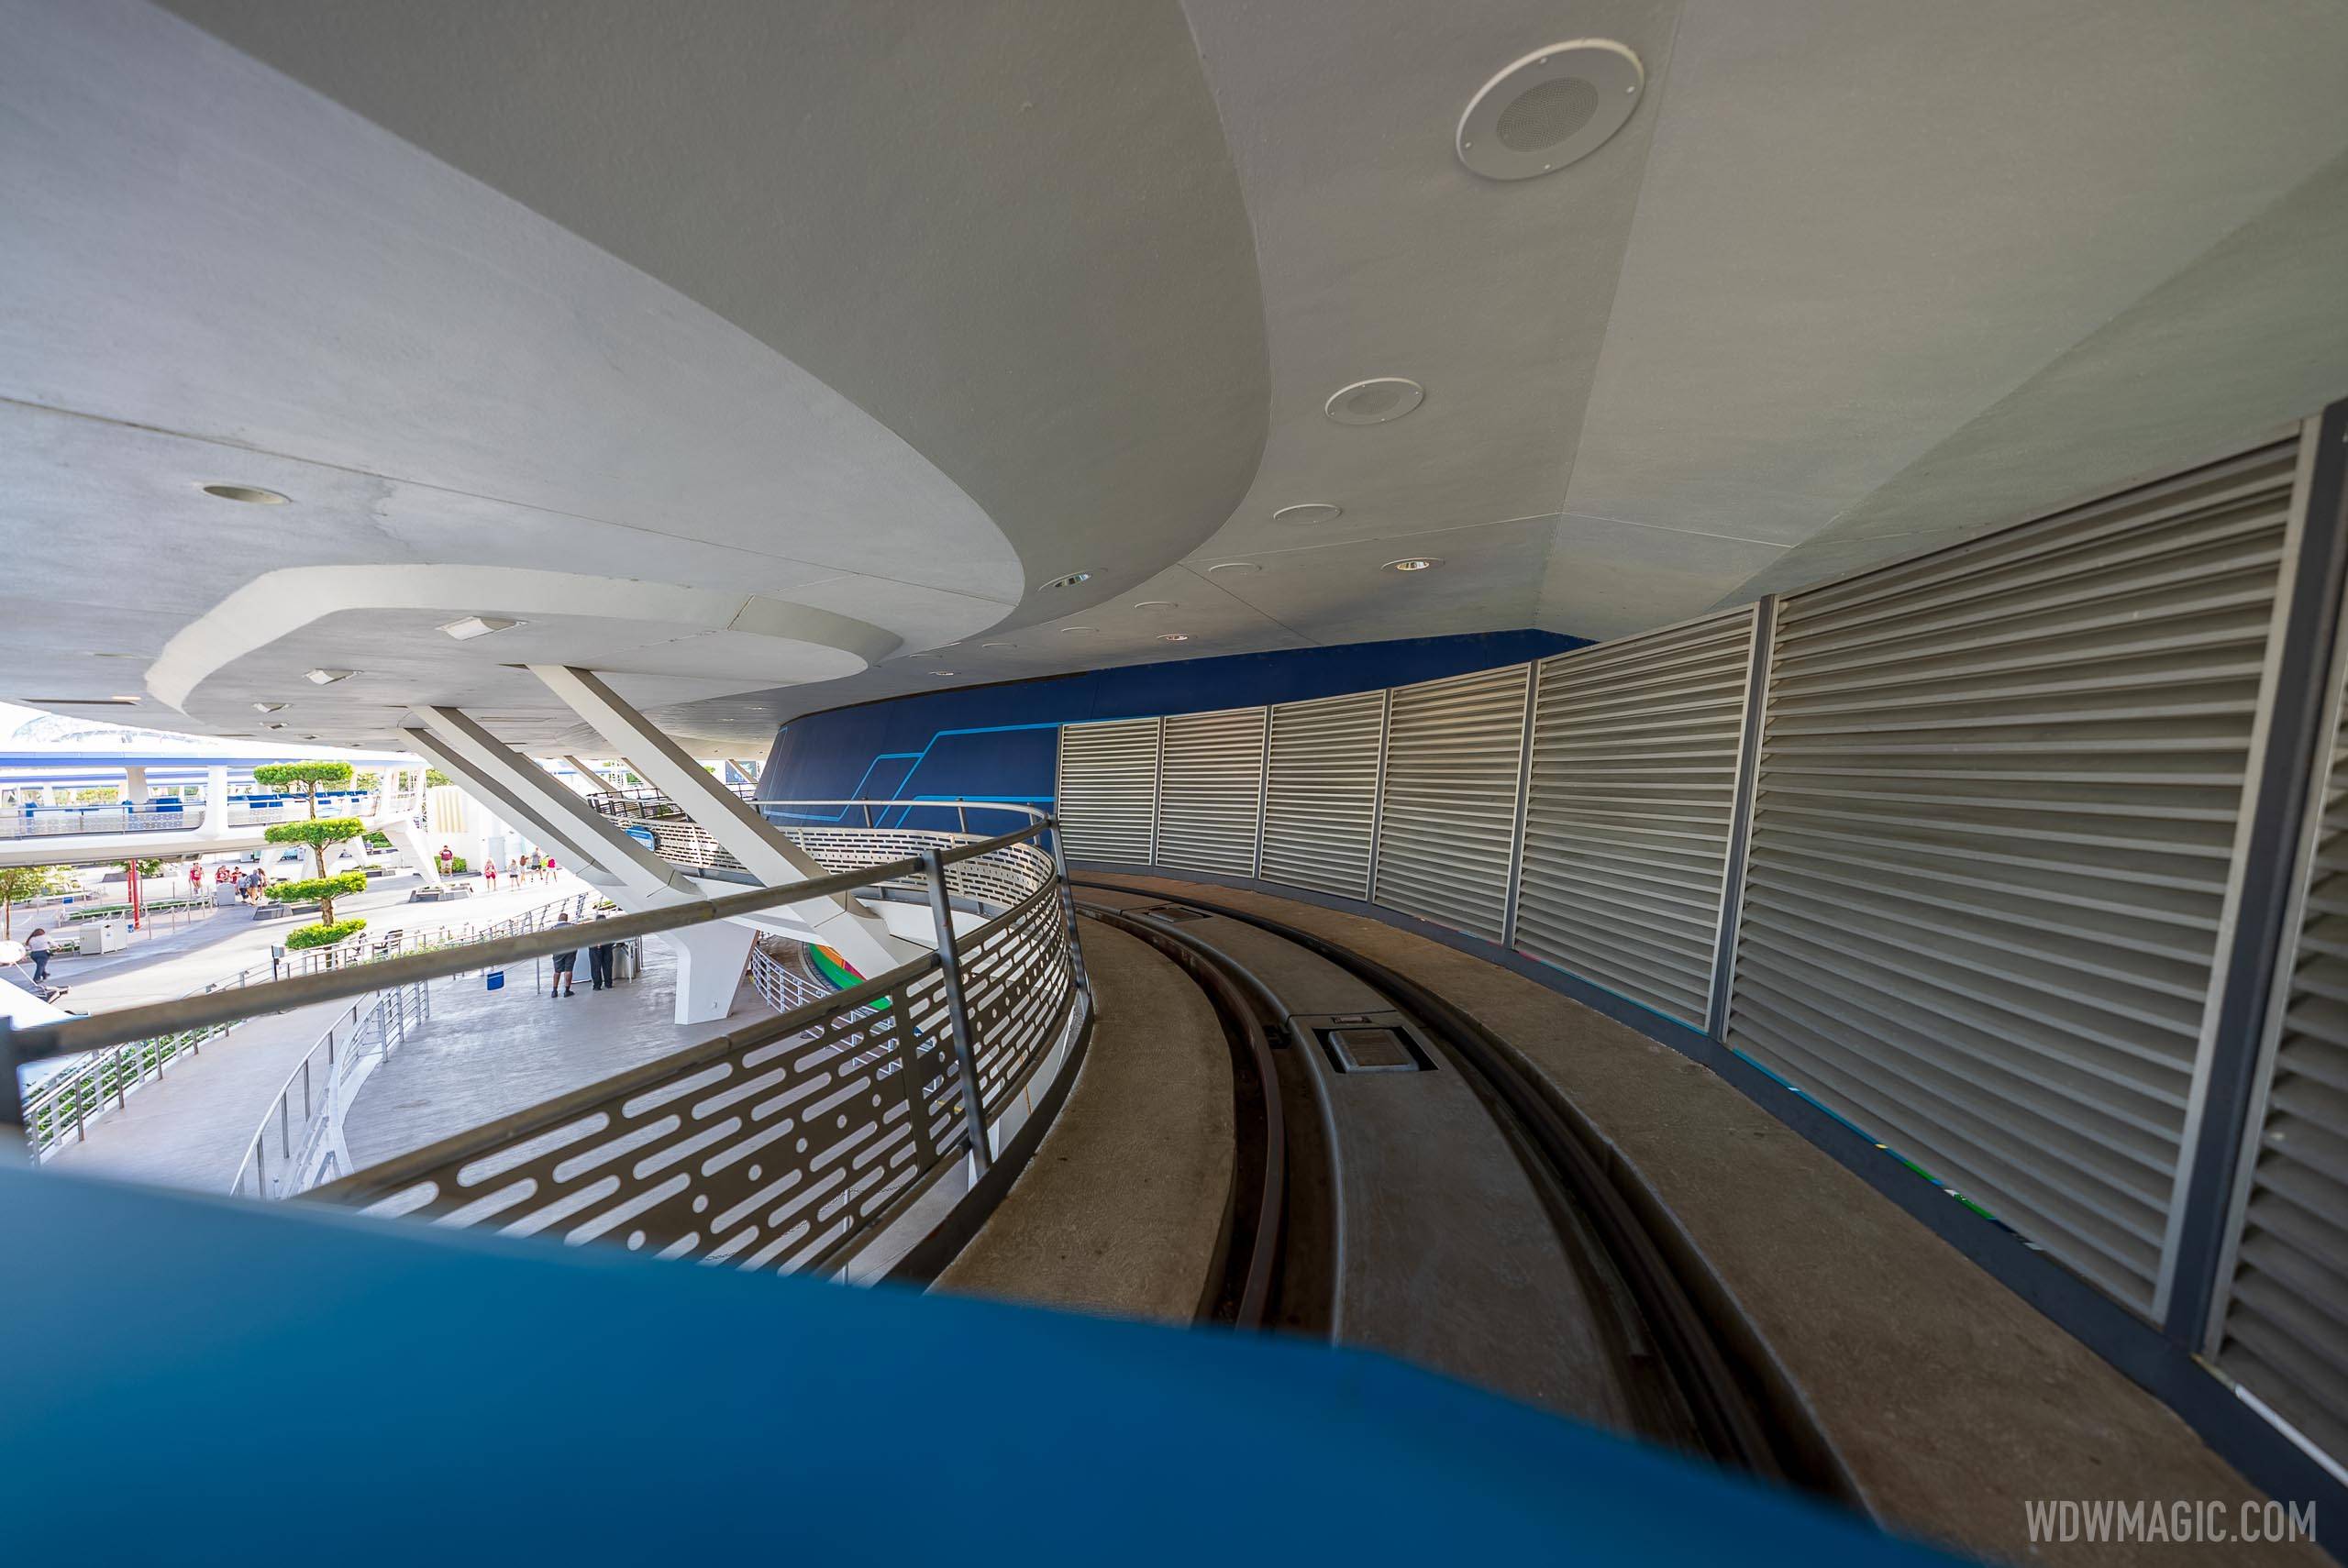 Tomorrowland Transit Authority Peoplemover closing for short refurbishment in December